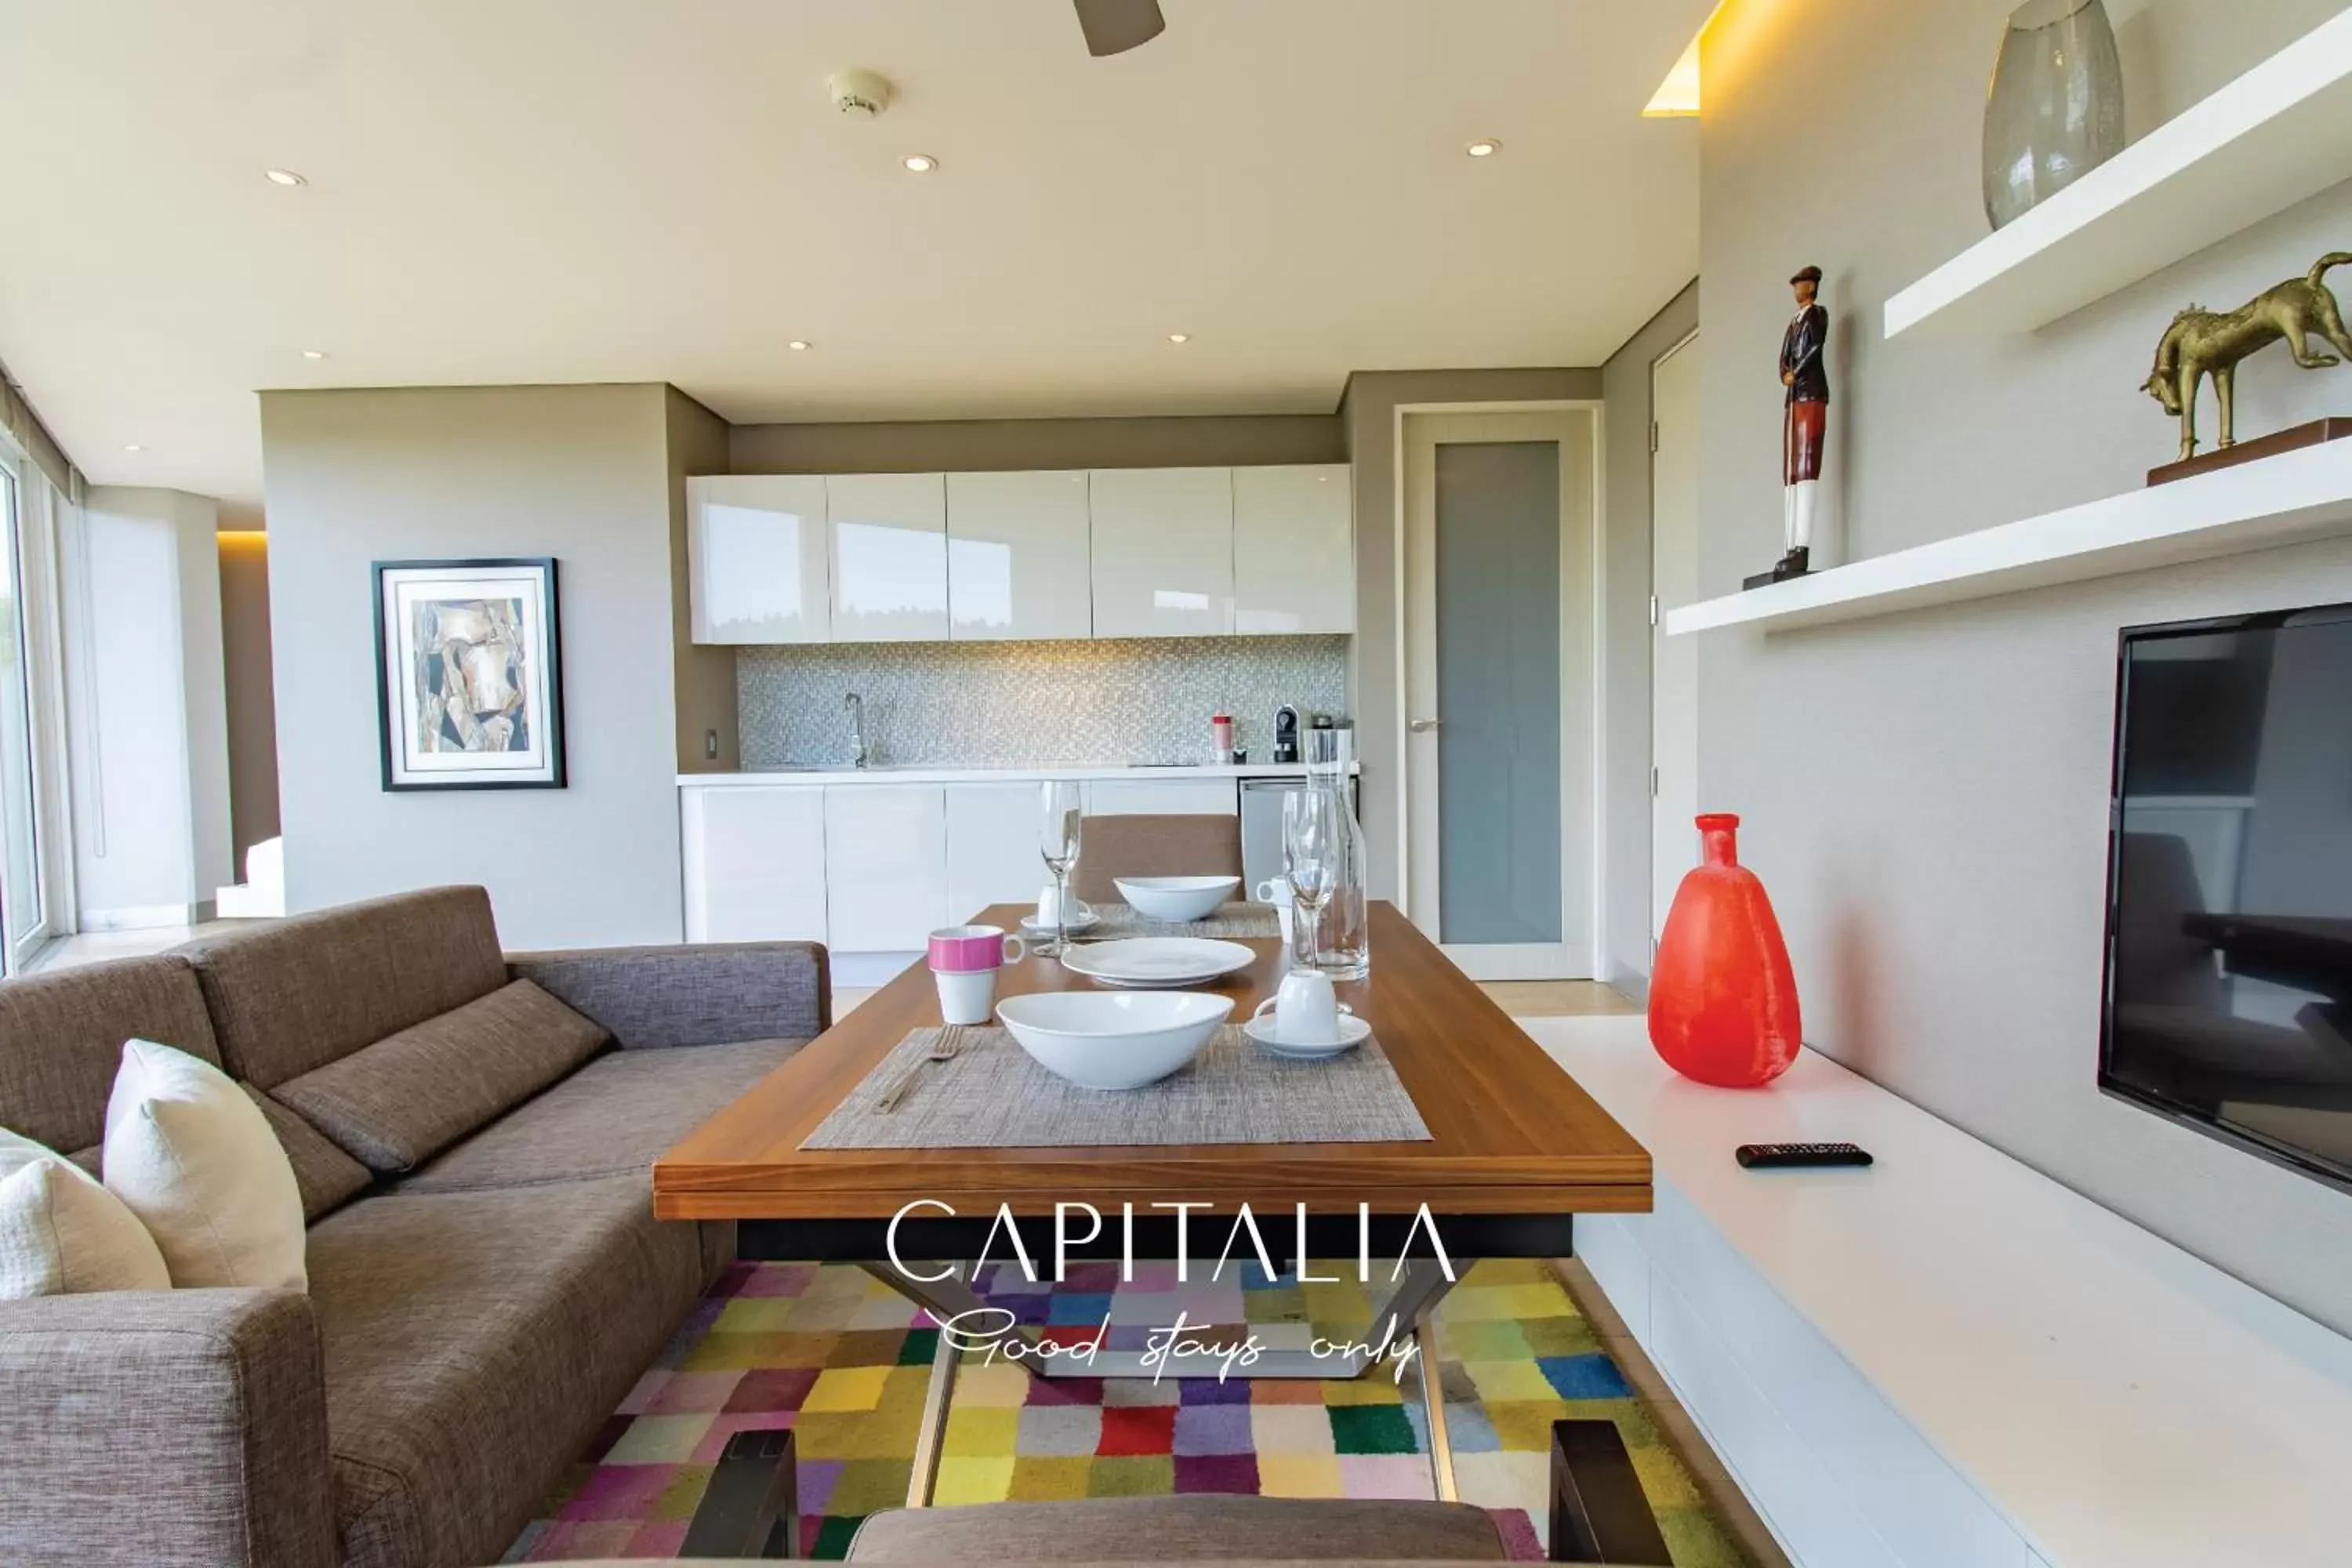 Deluxe Apartment in Capitalia - ApartHotel - San Angel Inn